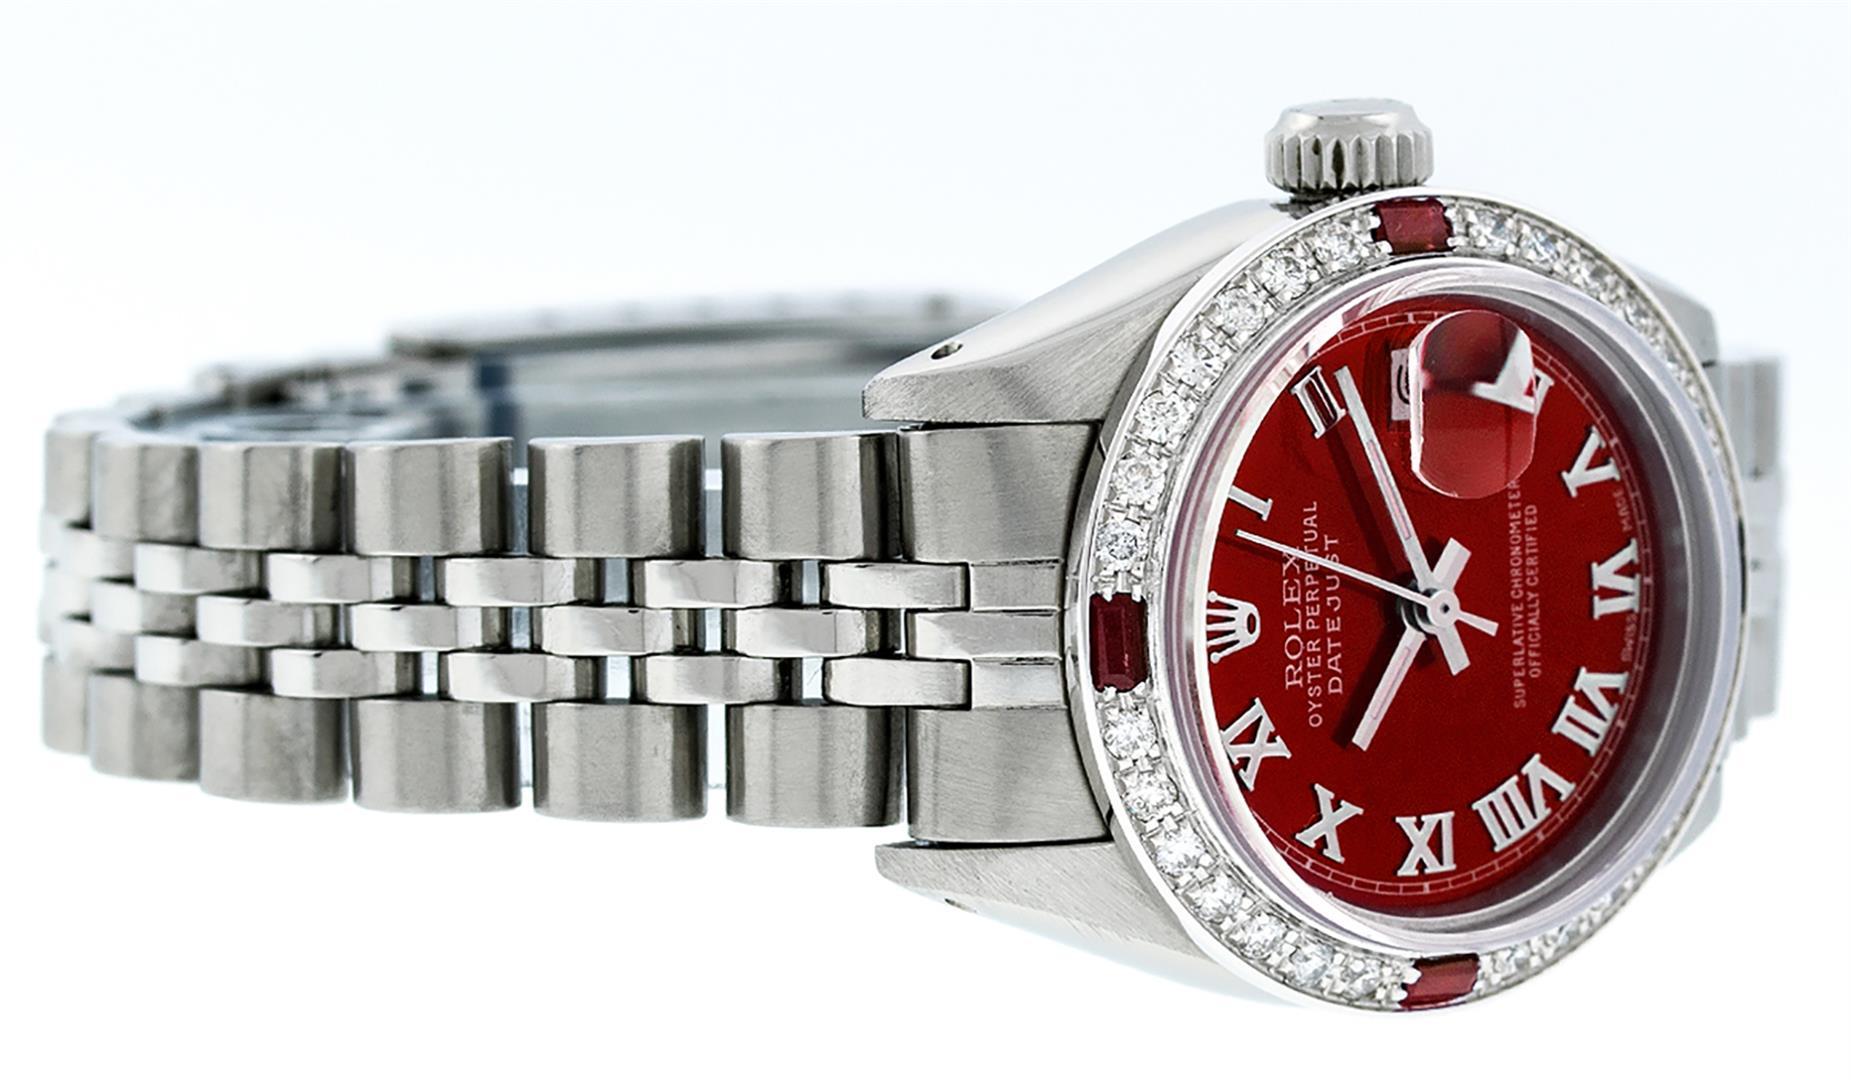 Rolex Ladies Stainless Steel Red Diamond & Ruby Datejust Wristwatch